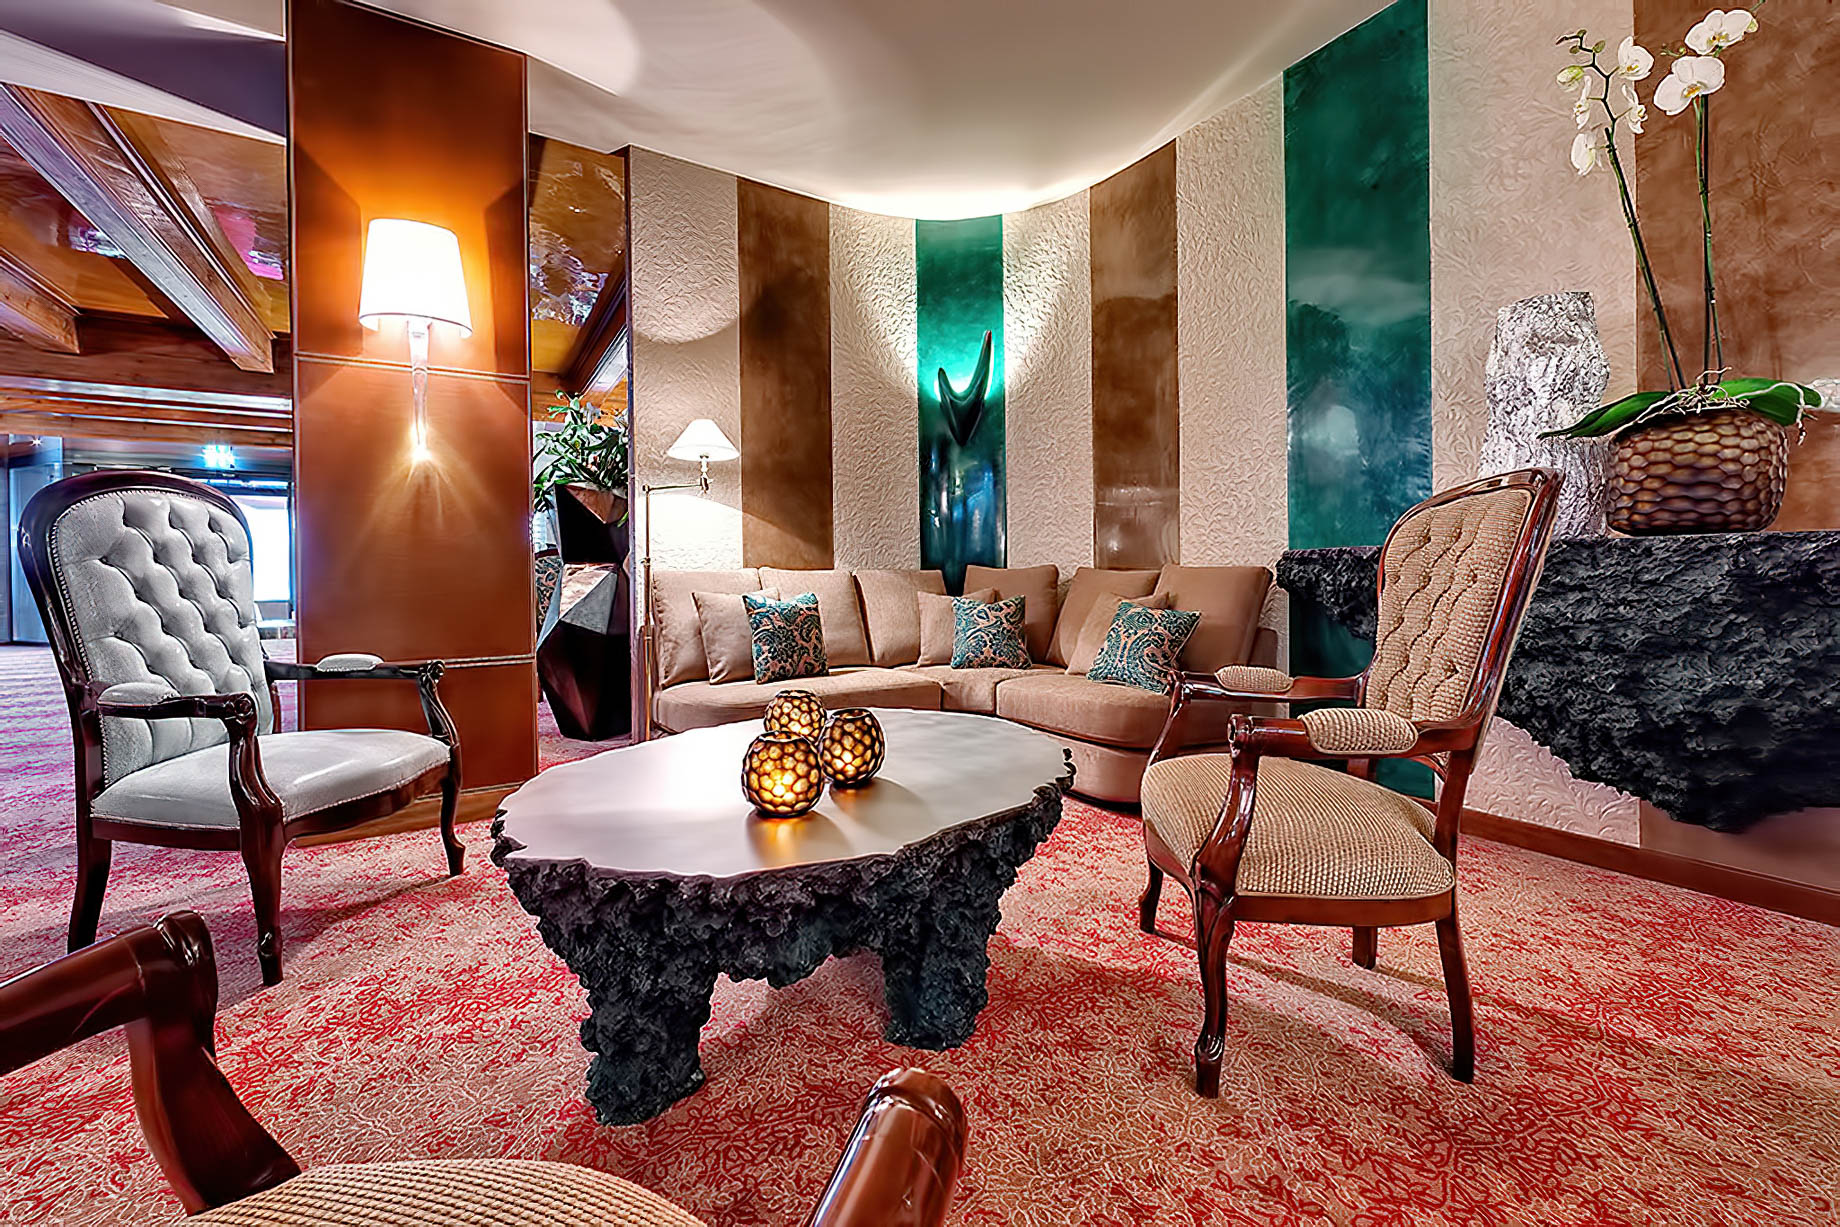 Tschuggen Grand Hotel - Arosa, Switzerland - Lounge